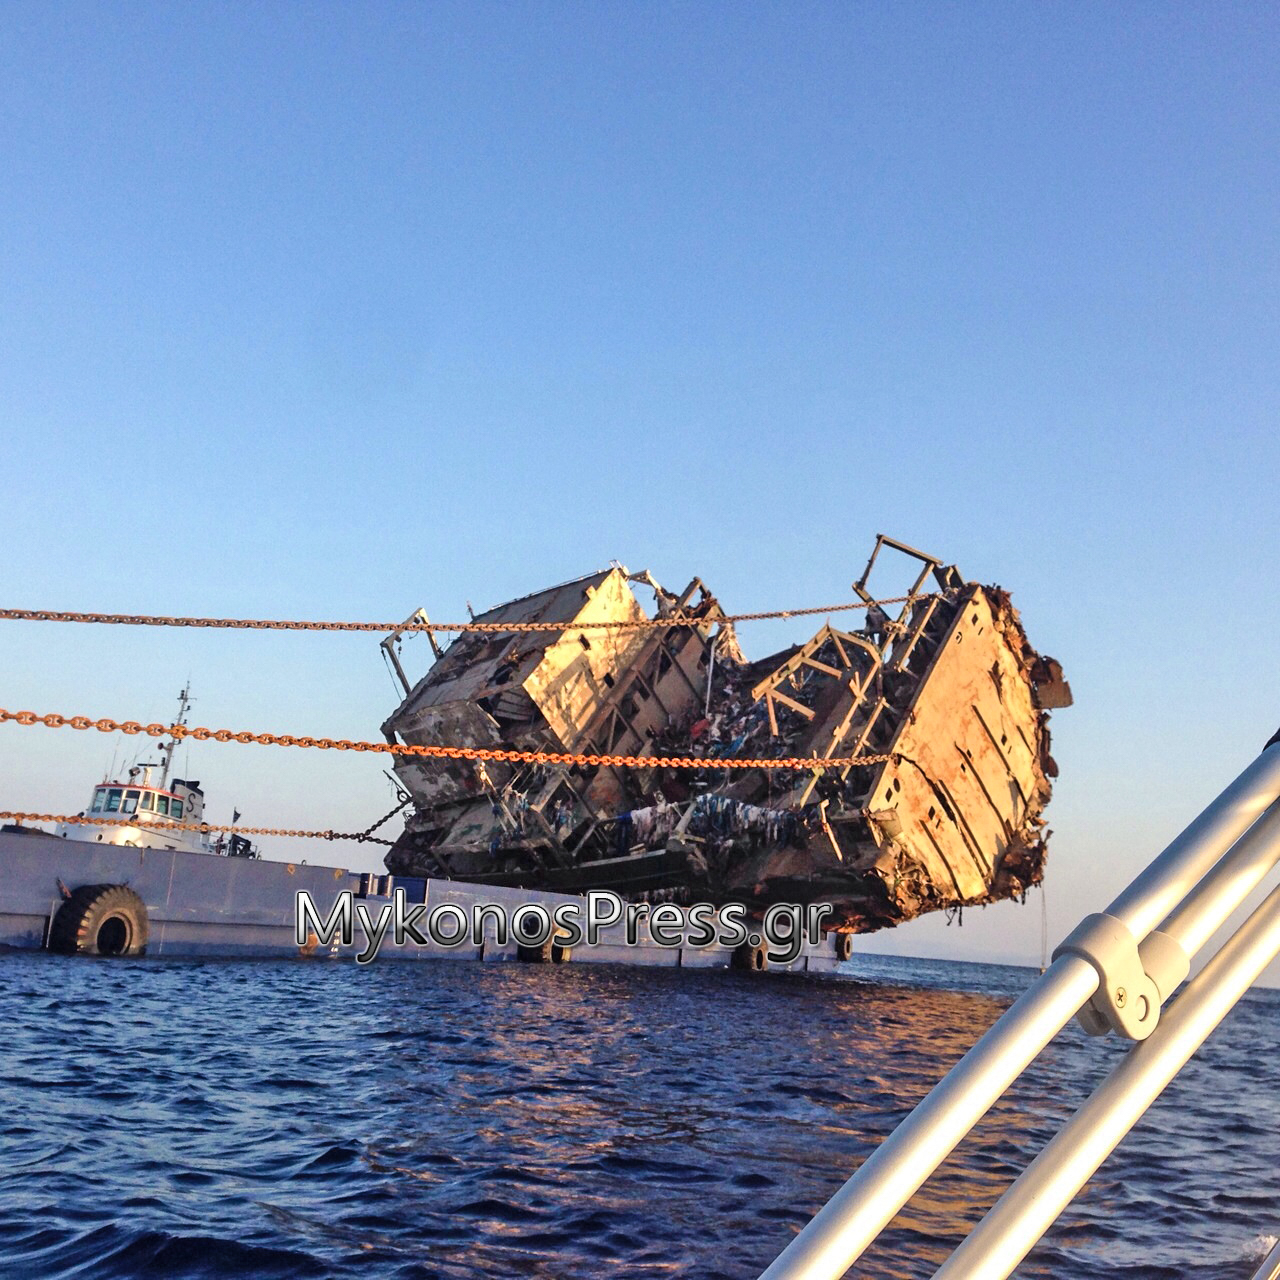 More information about "Εντυπωσιακές φωτογραφίες από την ανέλκυση του Τουρκικού πλοίου στην Μύκονο"